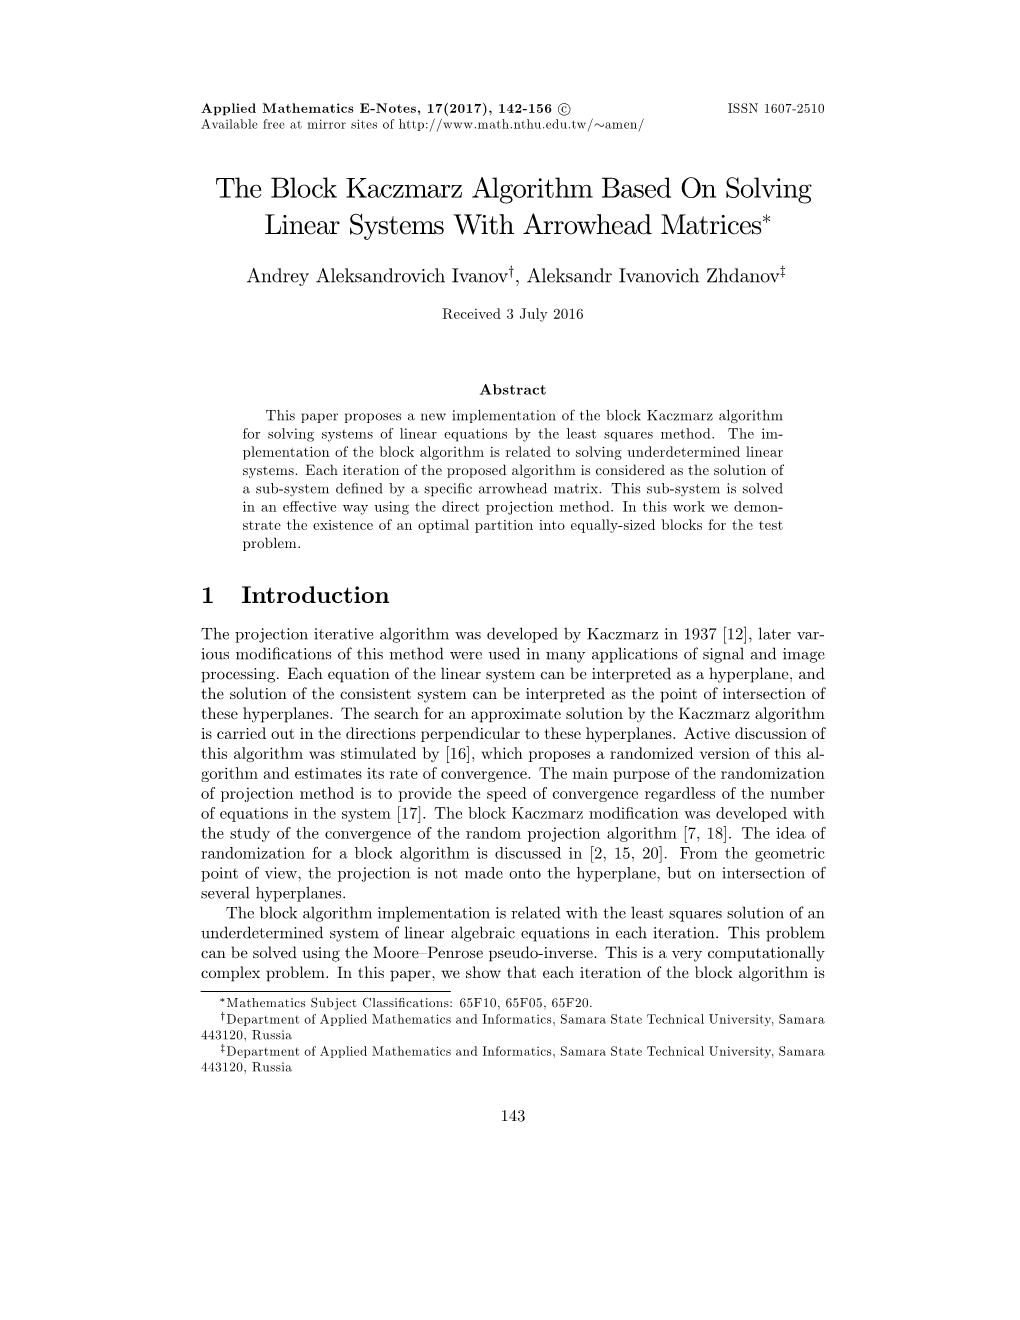 The Block Kaczmarz Algorithm Based on Solving Linear Systems with Arrowhead Matrices∗